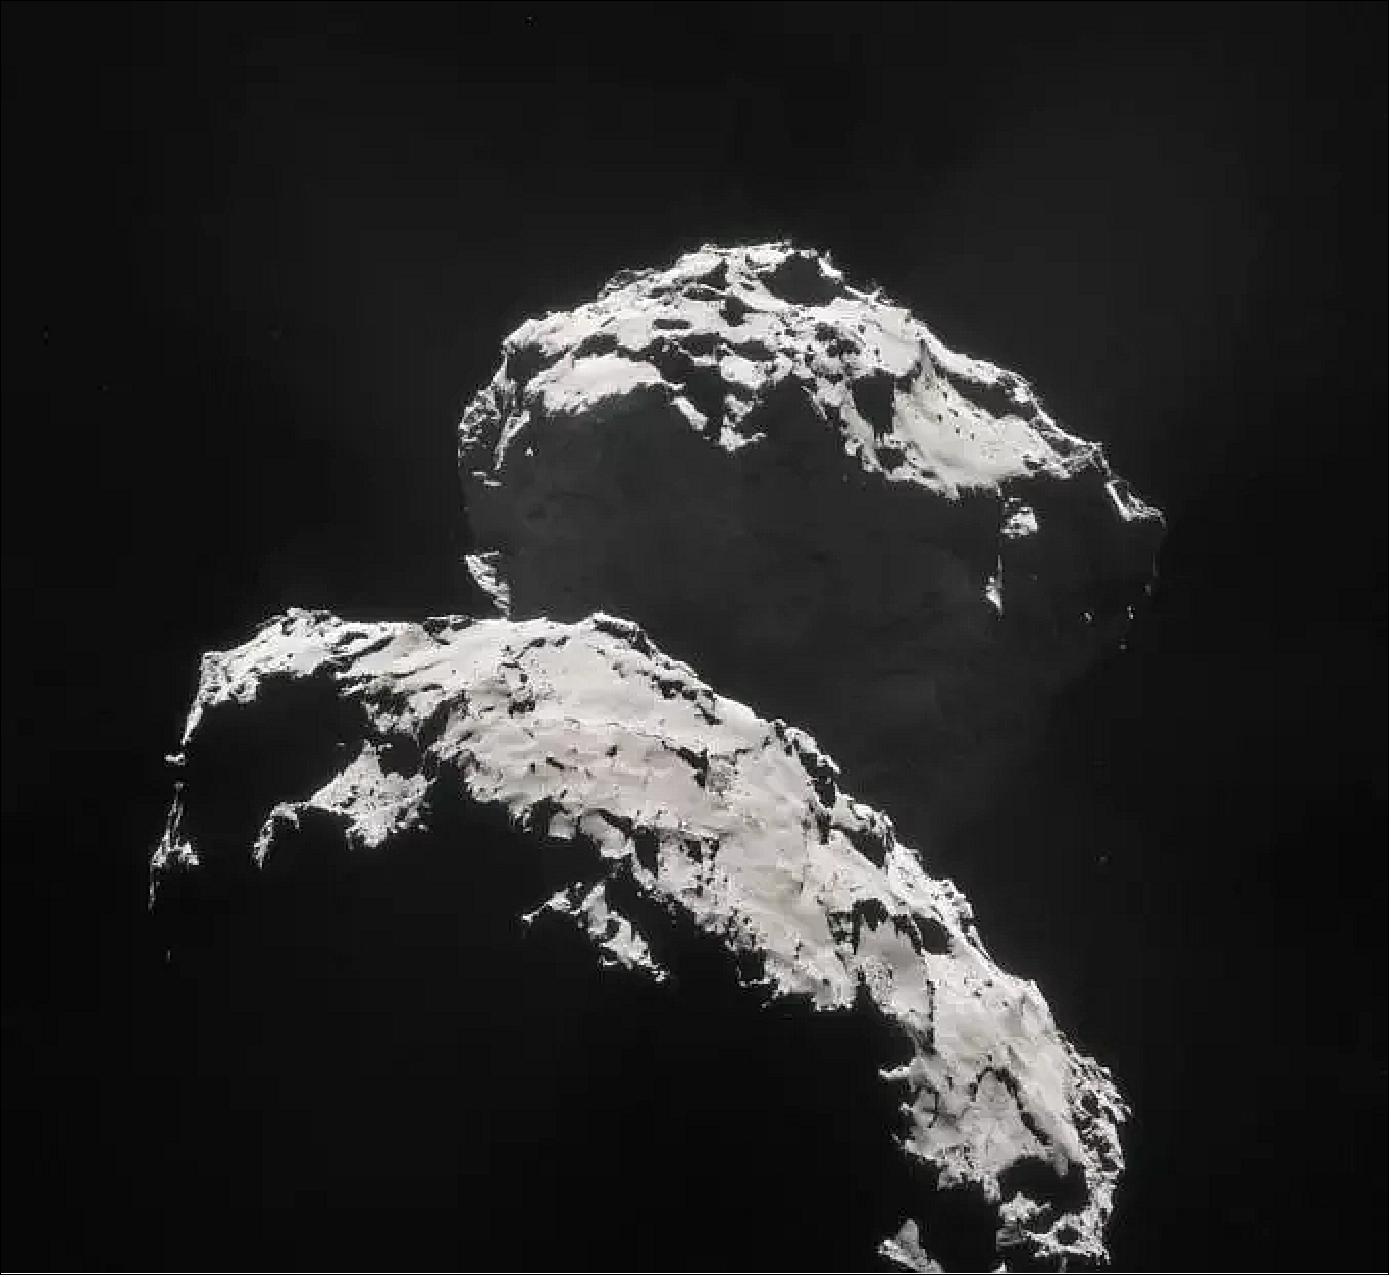 Figure 75: Mosaic of comet 67P/Churyumov–Gerasimenko, created using images taken on 10 September 2014 when ESA’s Rosetta spacecraft was 27.8 km from the comet (image credit: ESA/Rosetta/NAVCAM)